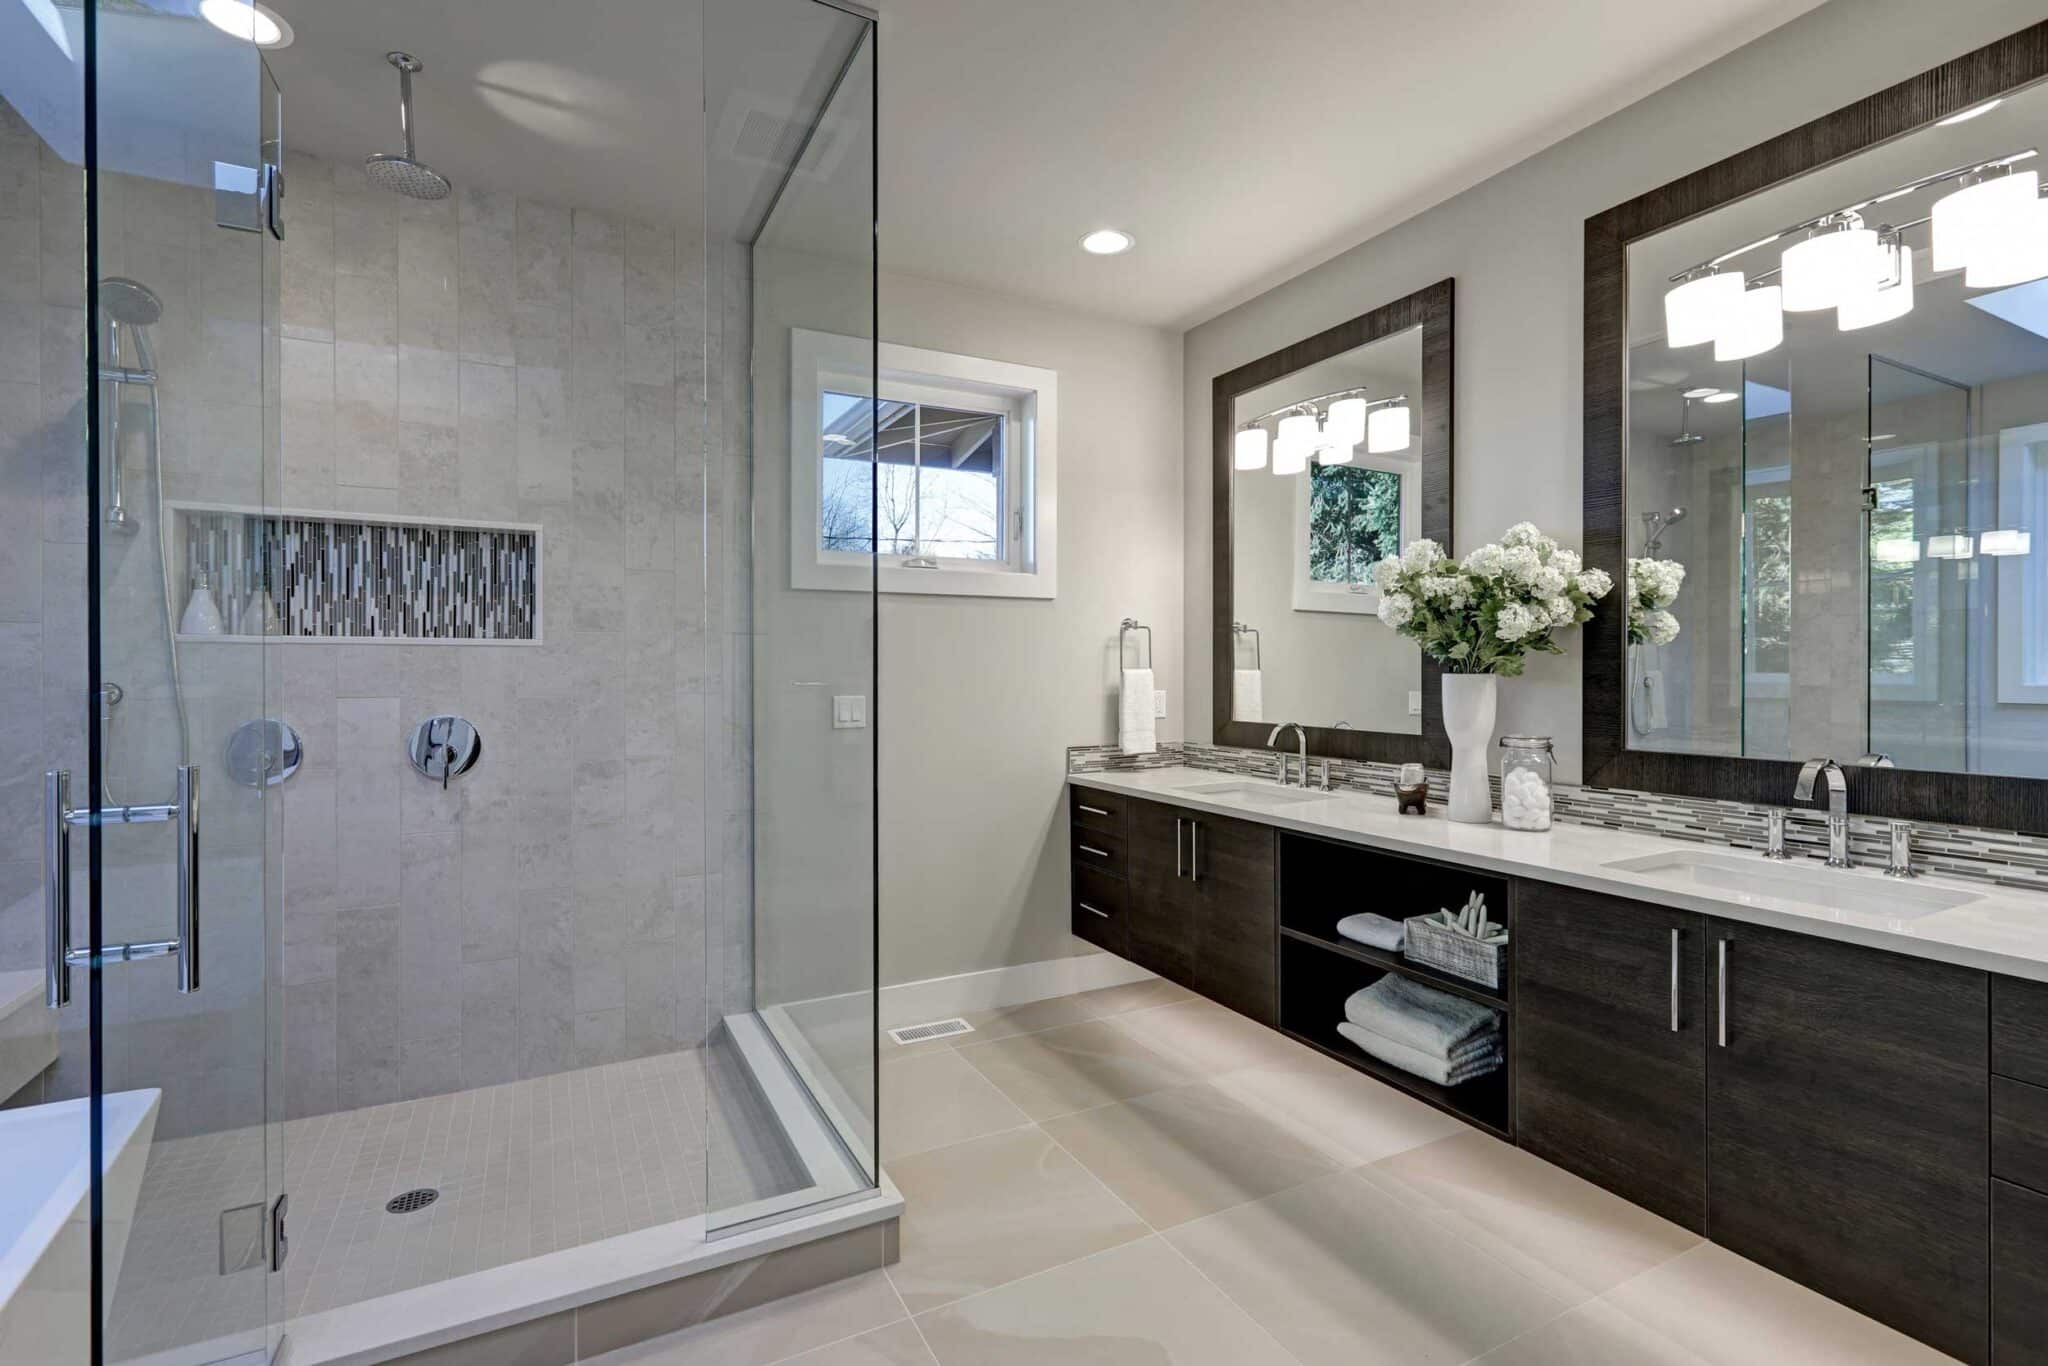 Modern bathroom with light gray tiles